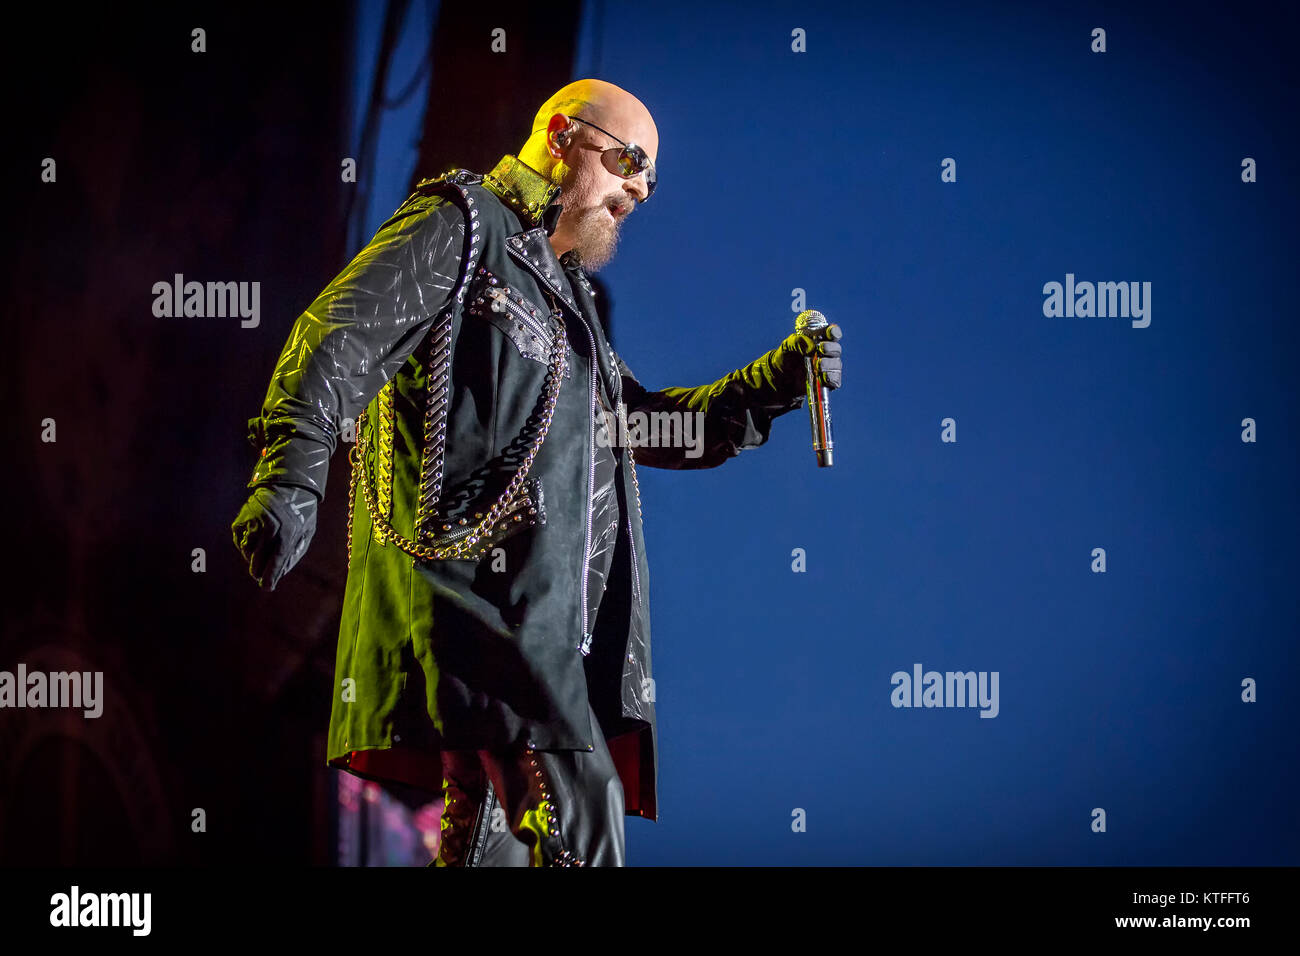 Judas Priest, legendary heavy-metal band, sets 2 Alabama concerts